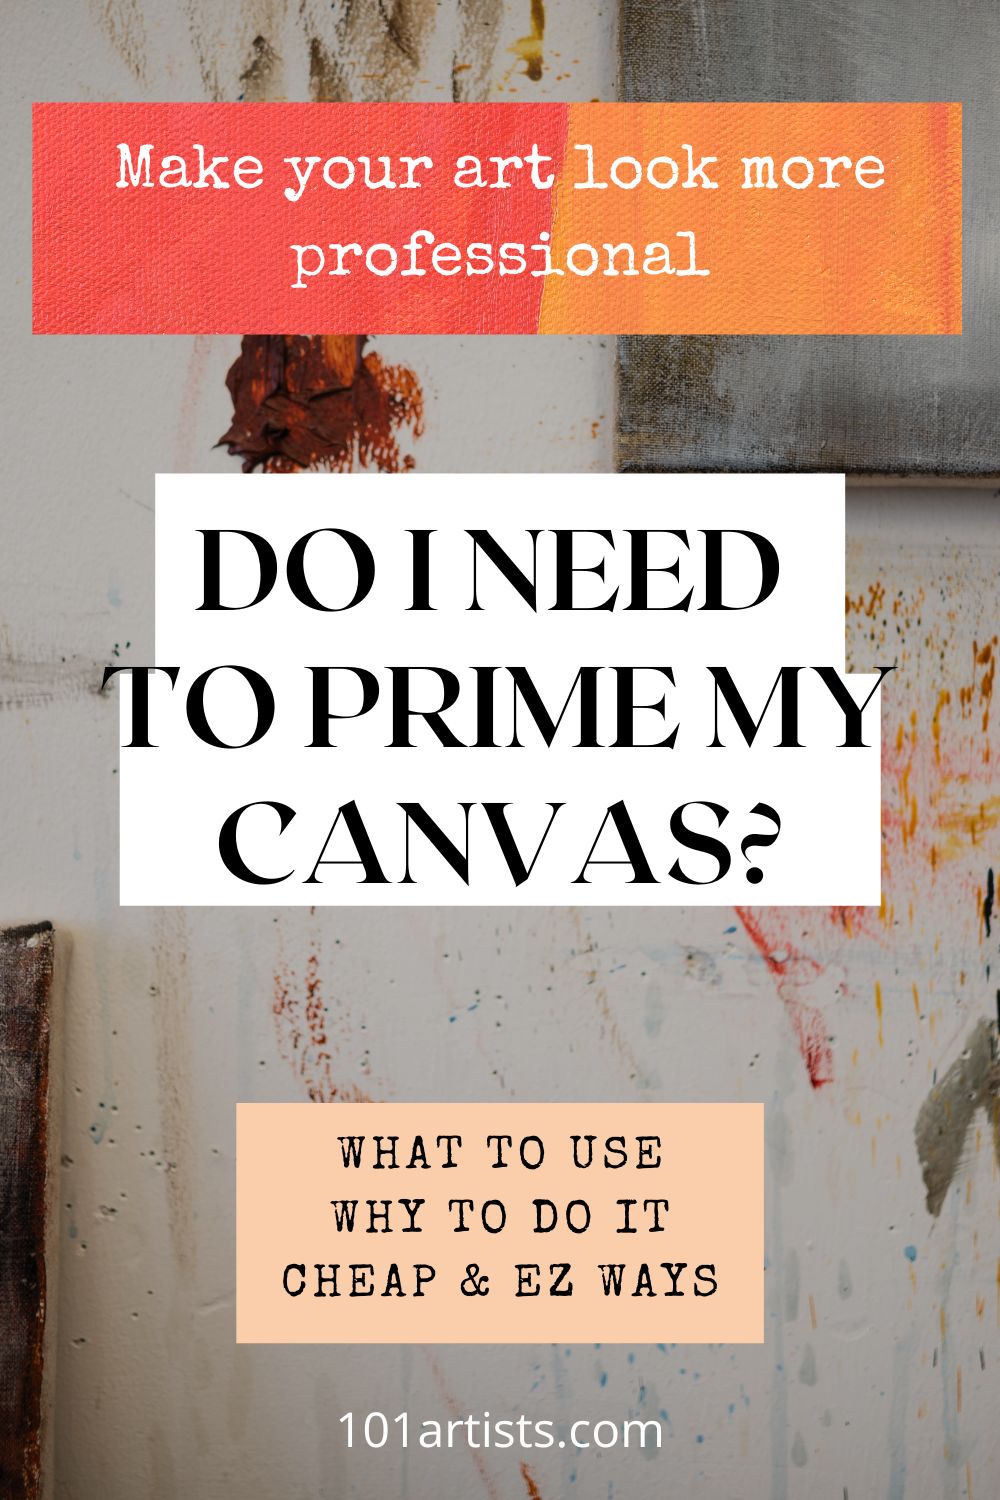 Why Choose Black Primed Canvas?